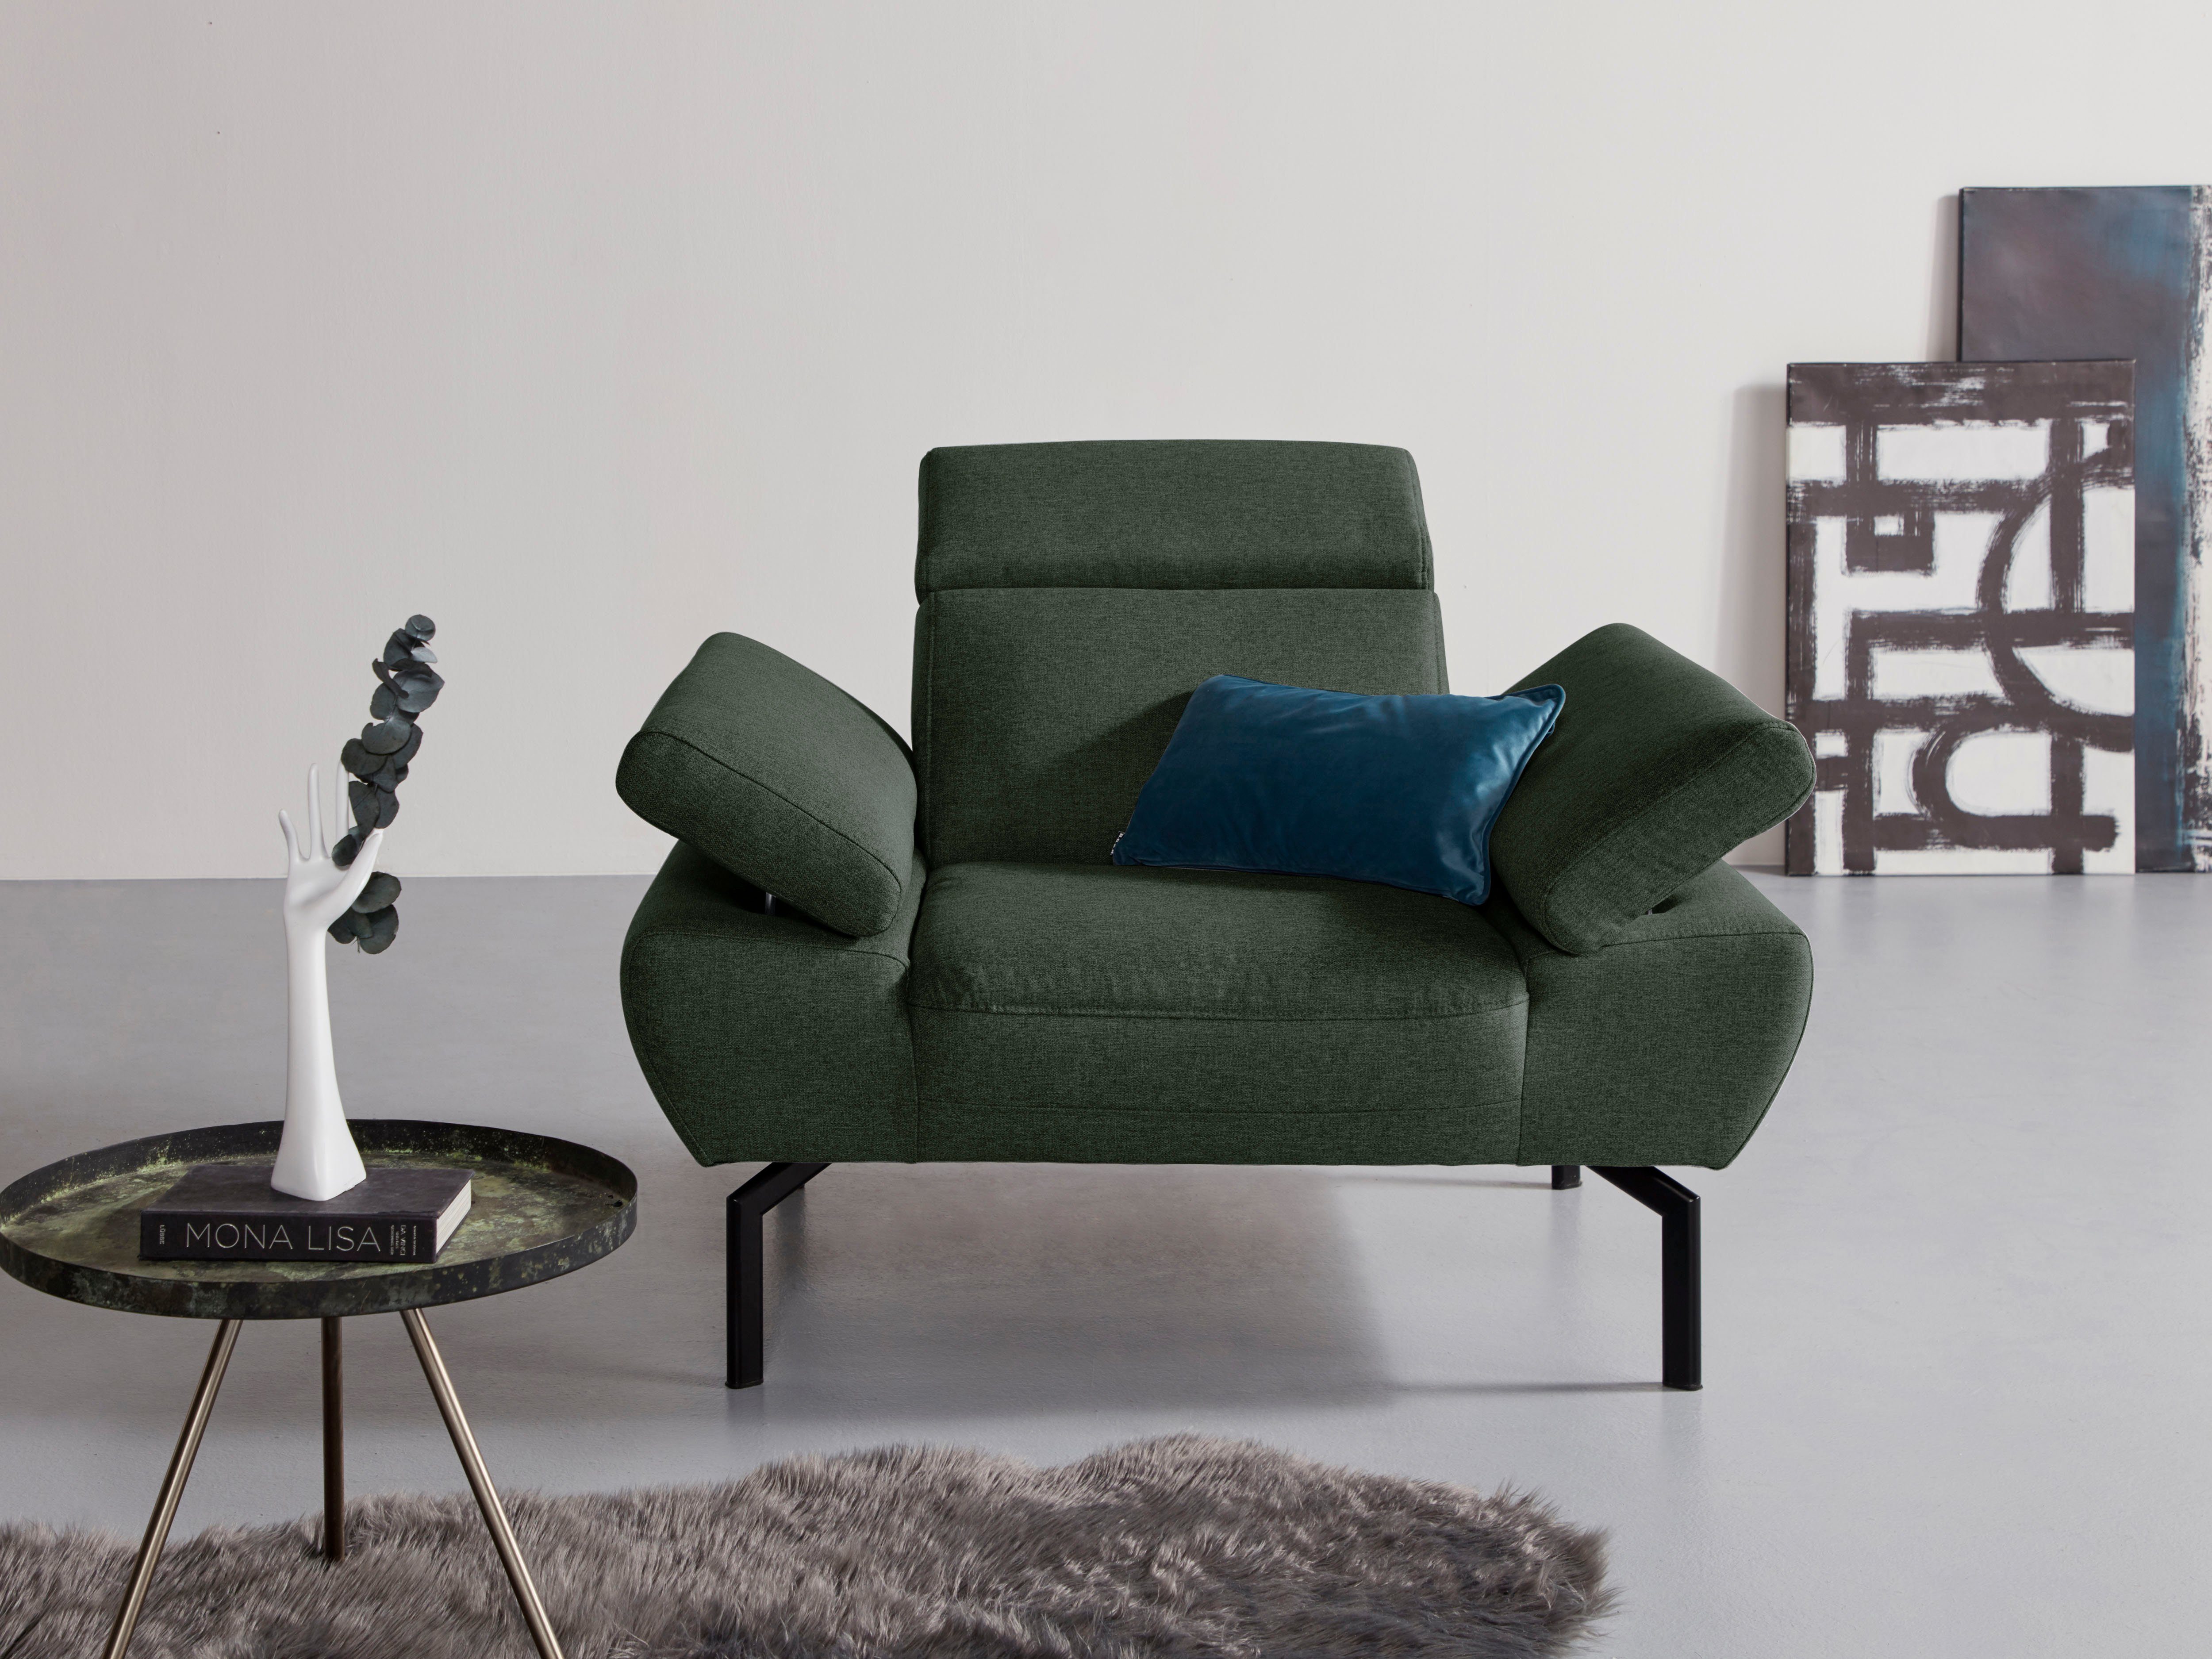 Places of Luxus-Microfaser Sessel Style Rückenverstellung, wahlweise mit Trapino in Luxus, Lederoptik